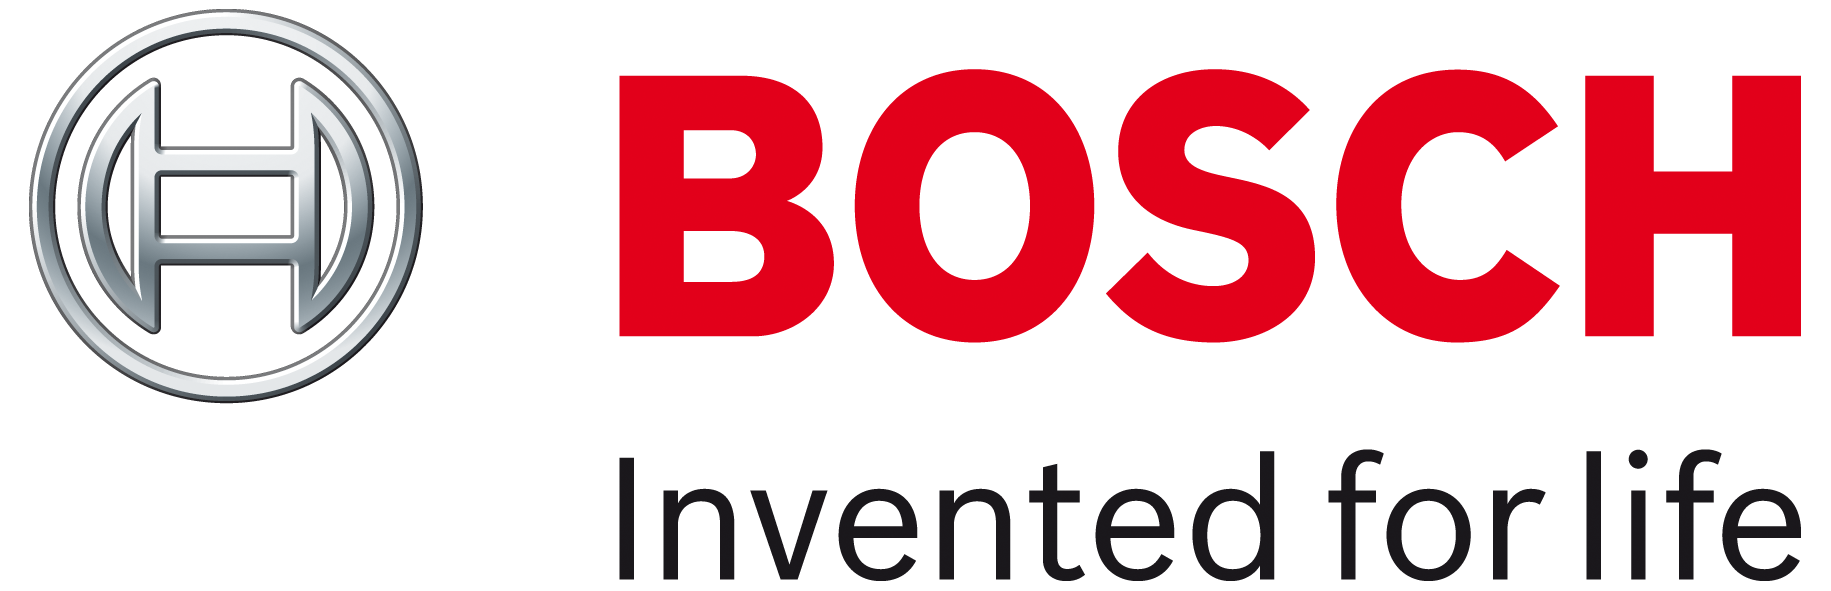 Pendik Bosch Kombi servis